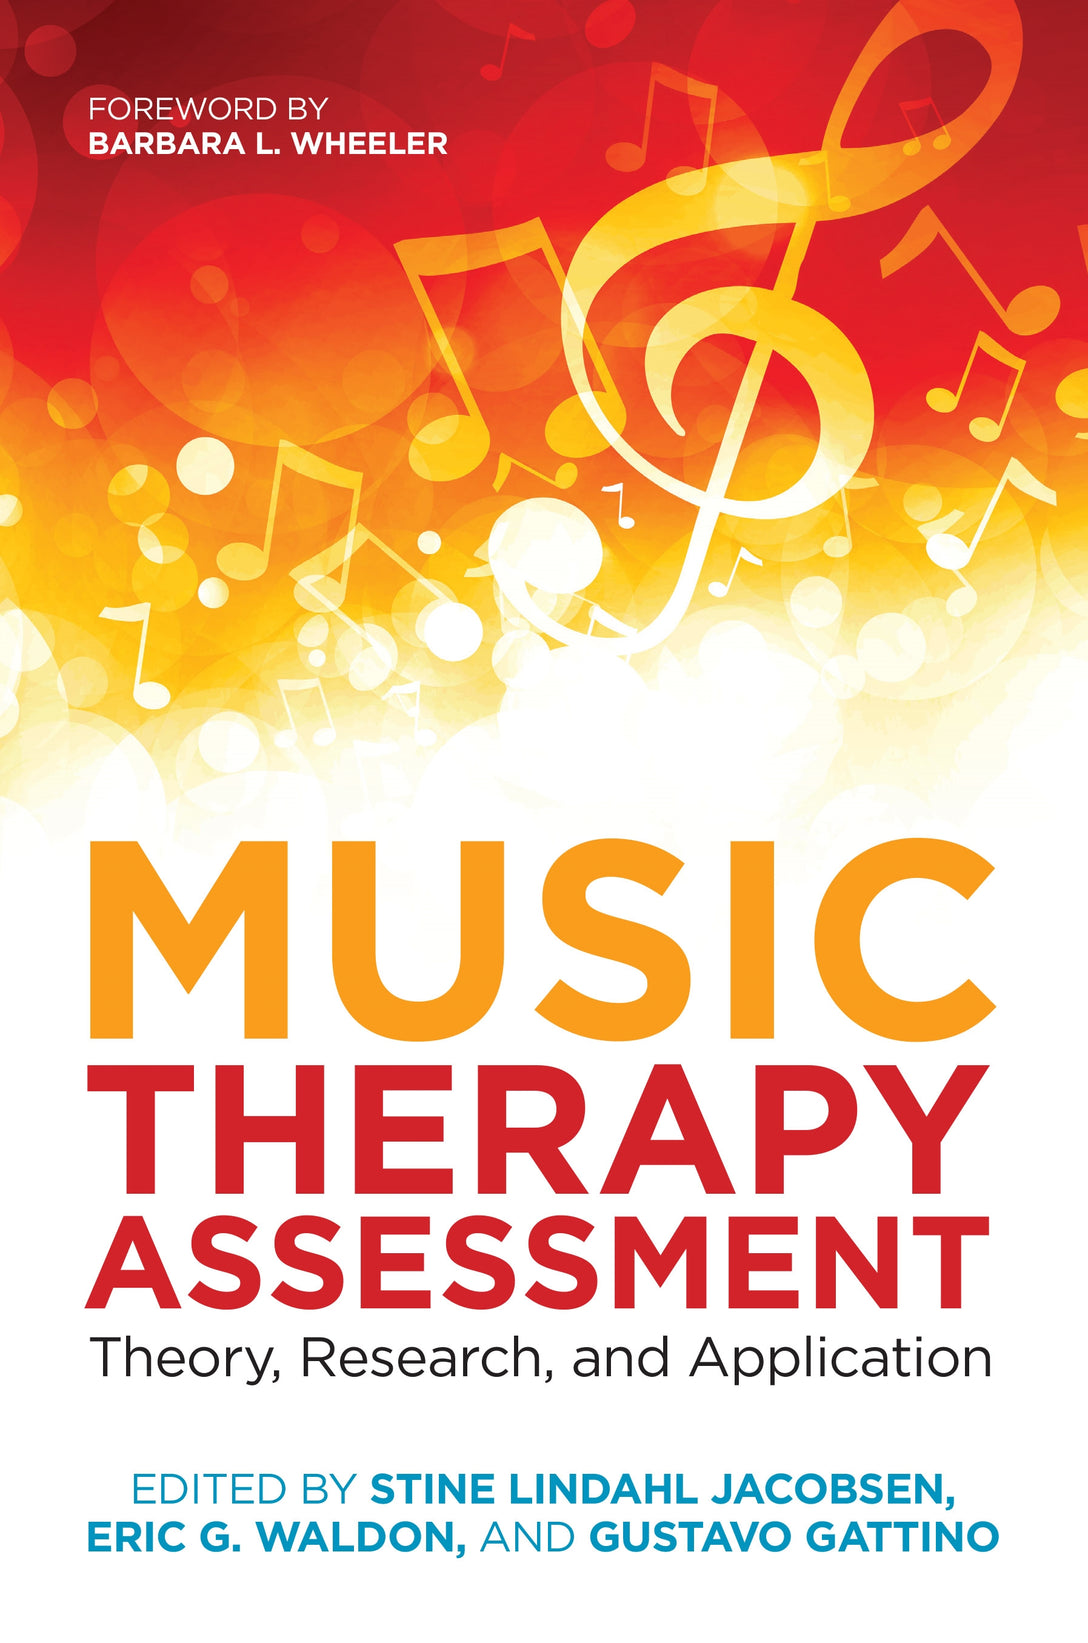 Music Therapy Assessment by Eric G. Waldon, Stine Lindahl Jacobsen, Gustavo Schulz Gattino, Barbara L. Wheeler, No Author Listed